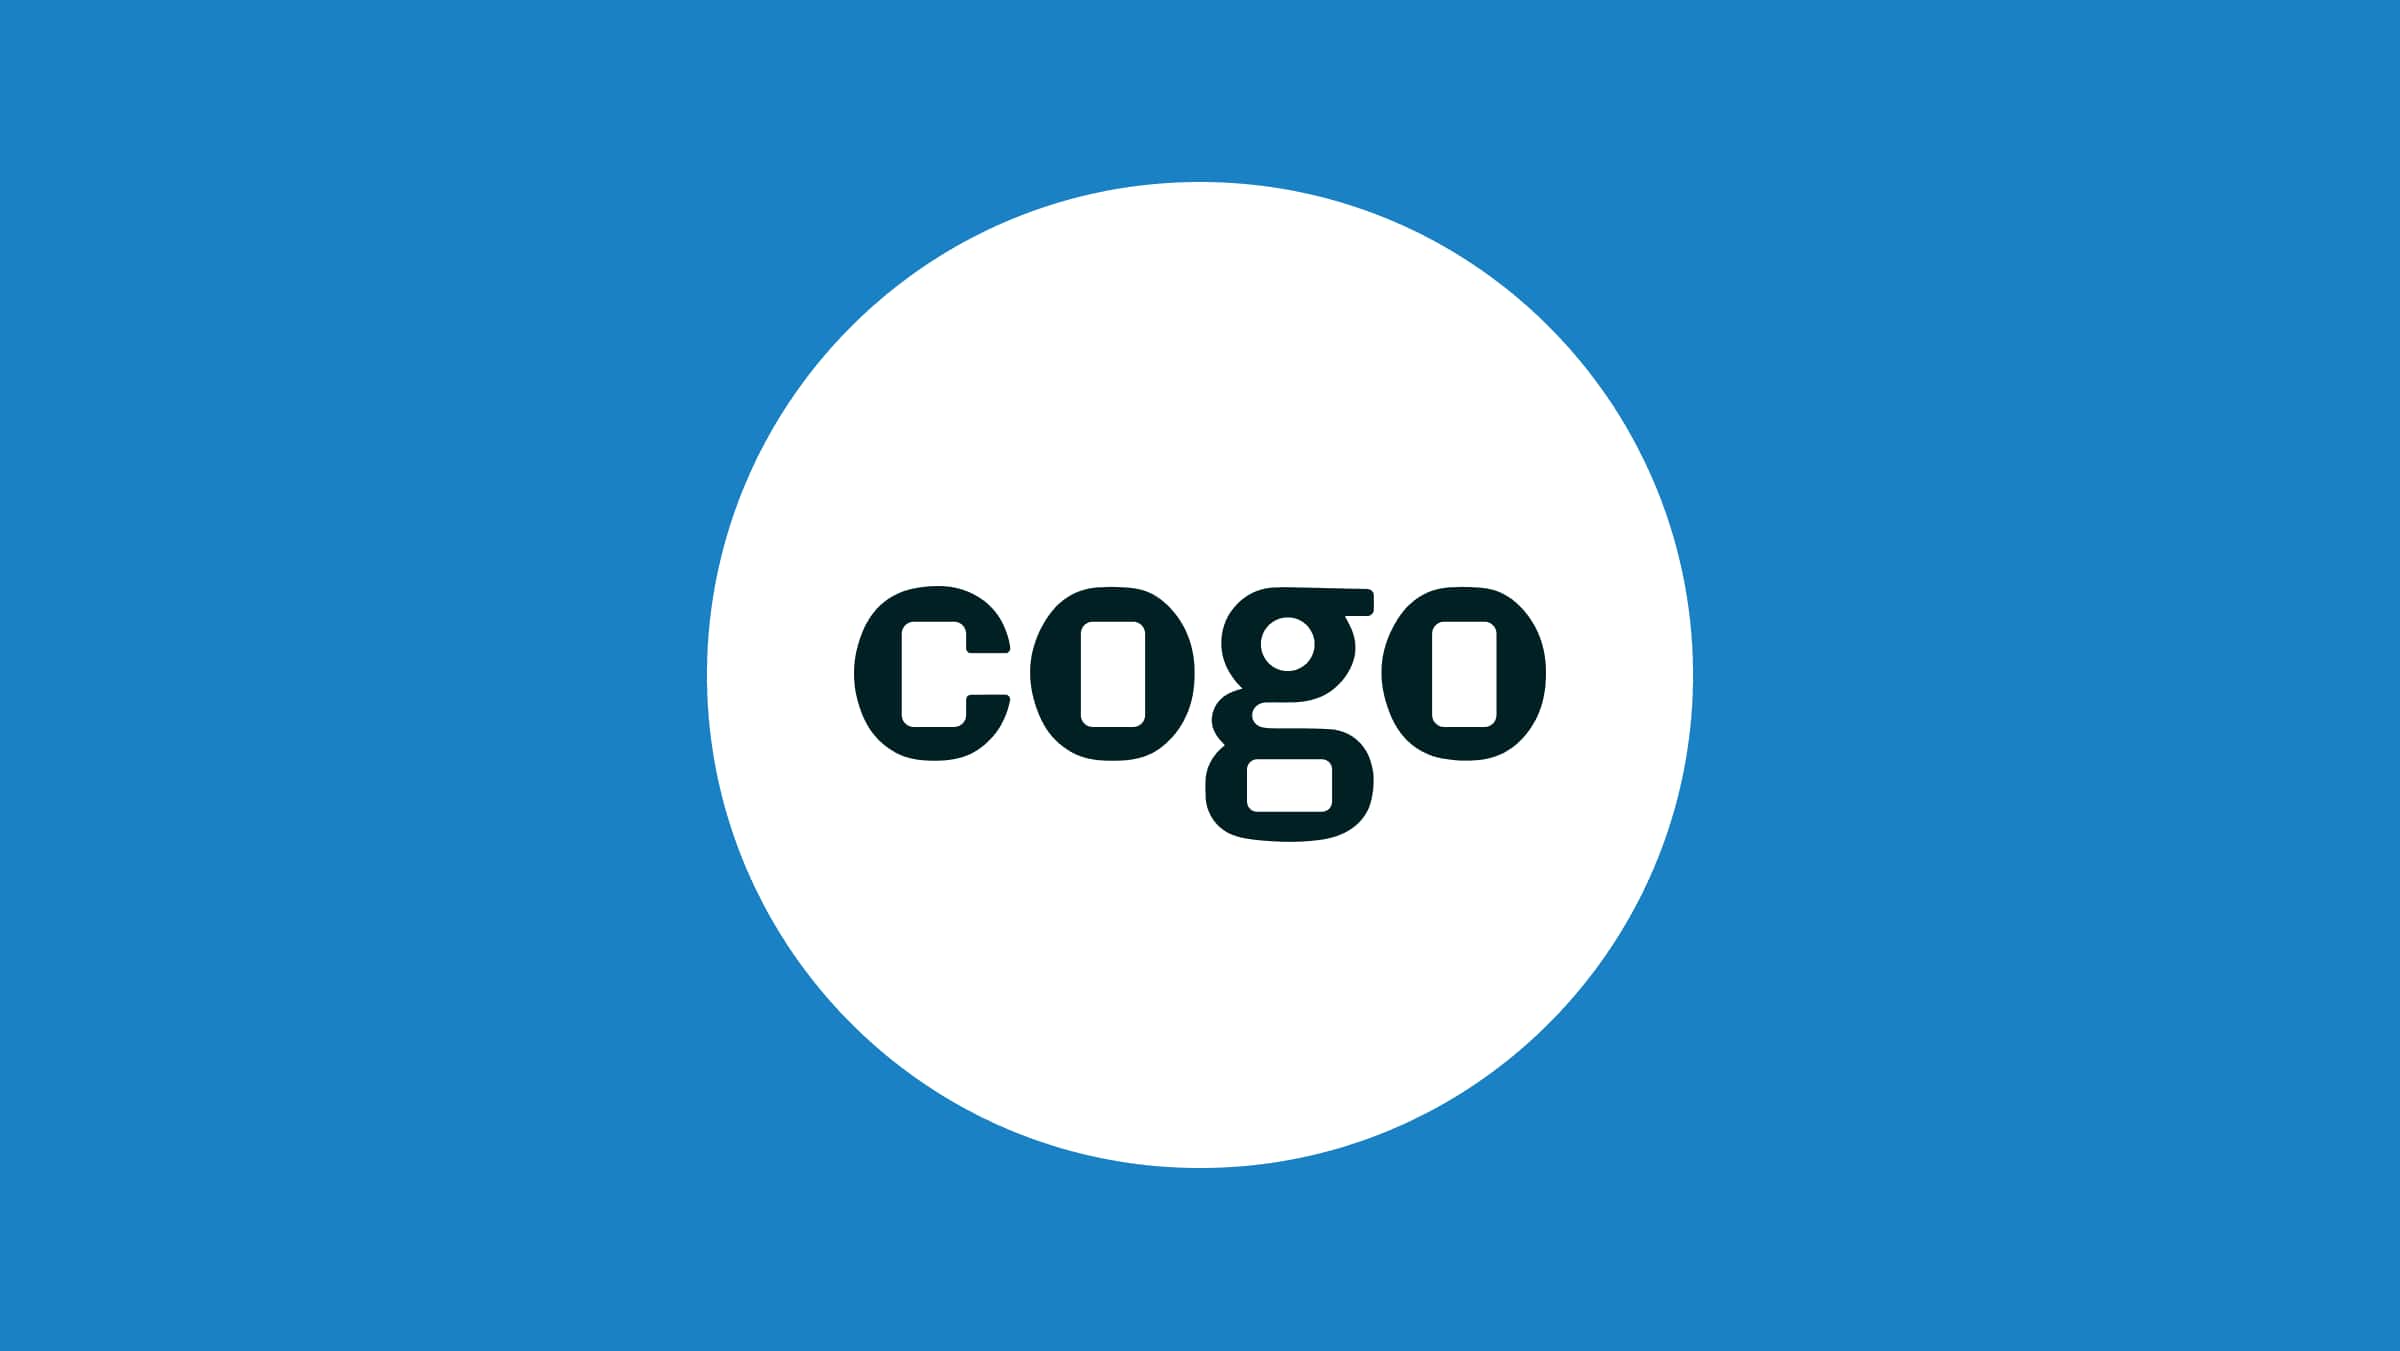 The Cogo logo